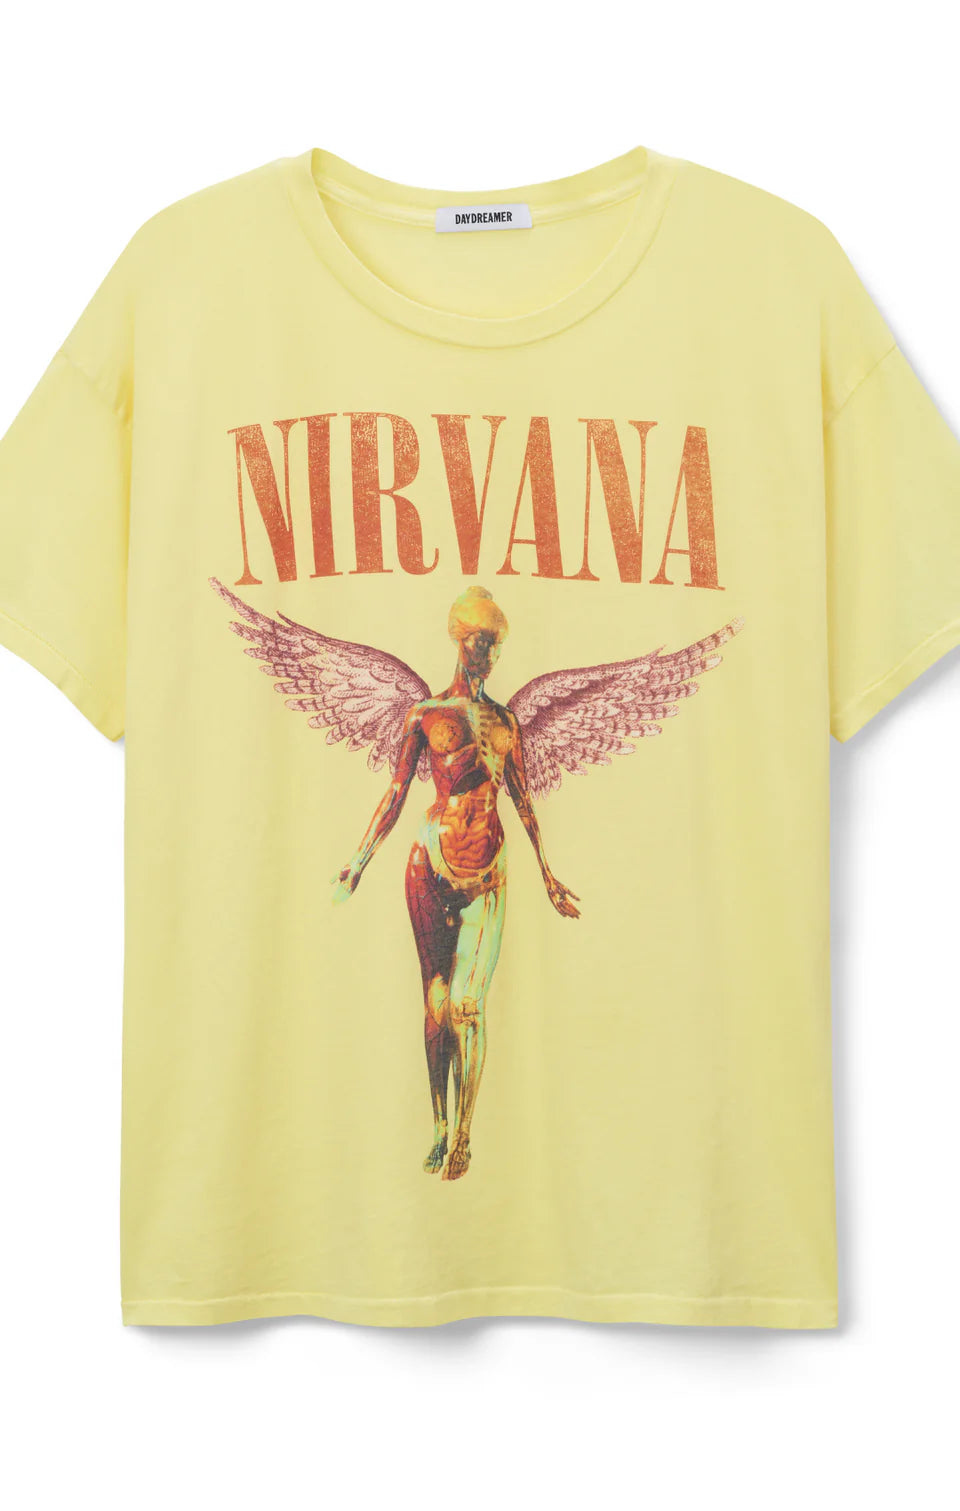 Nirvana In Utero Cover Merch Tee | DAYDREAMER